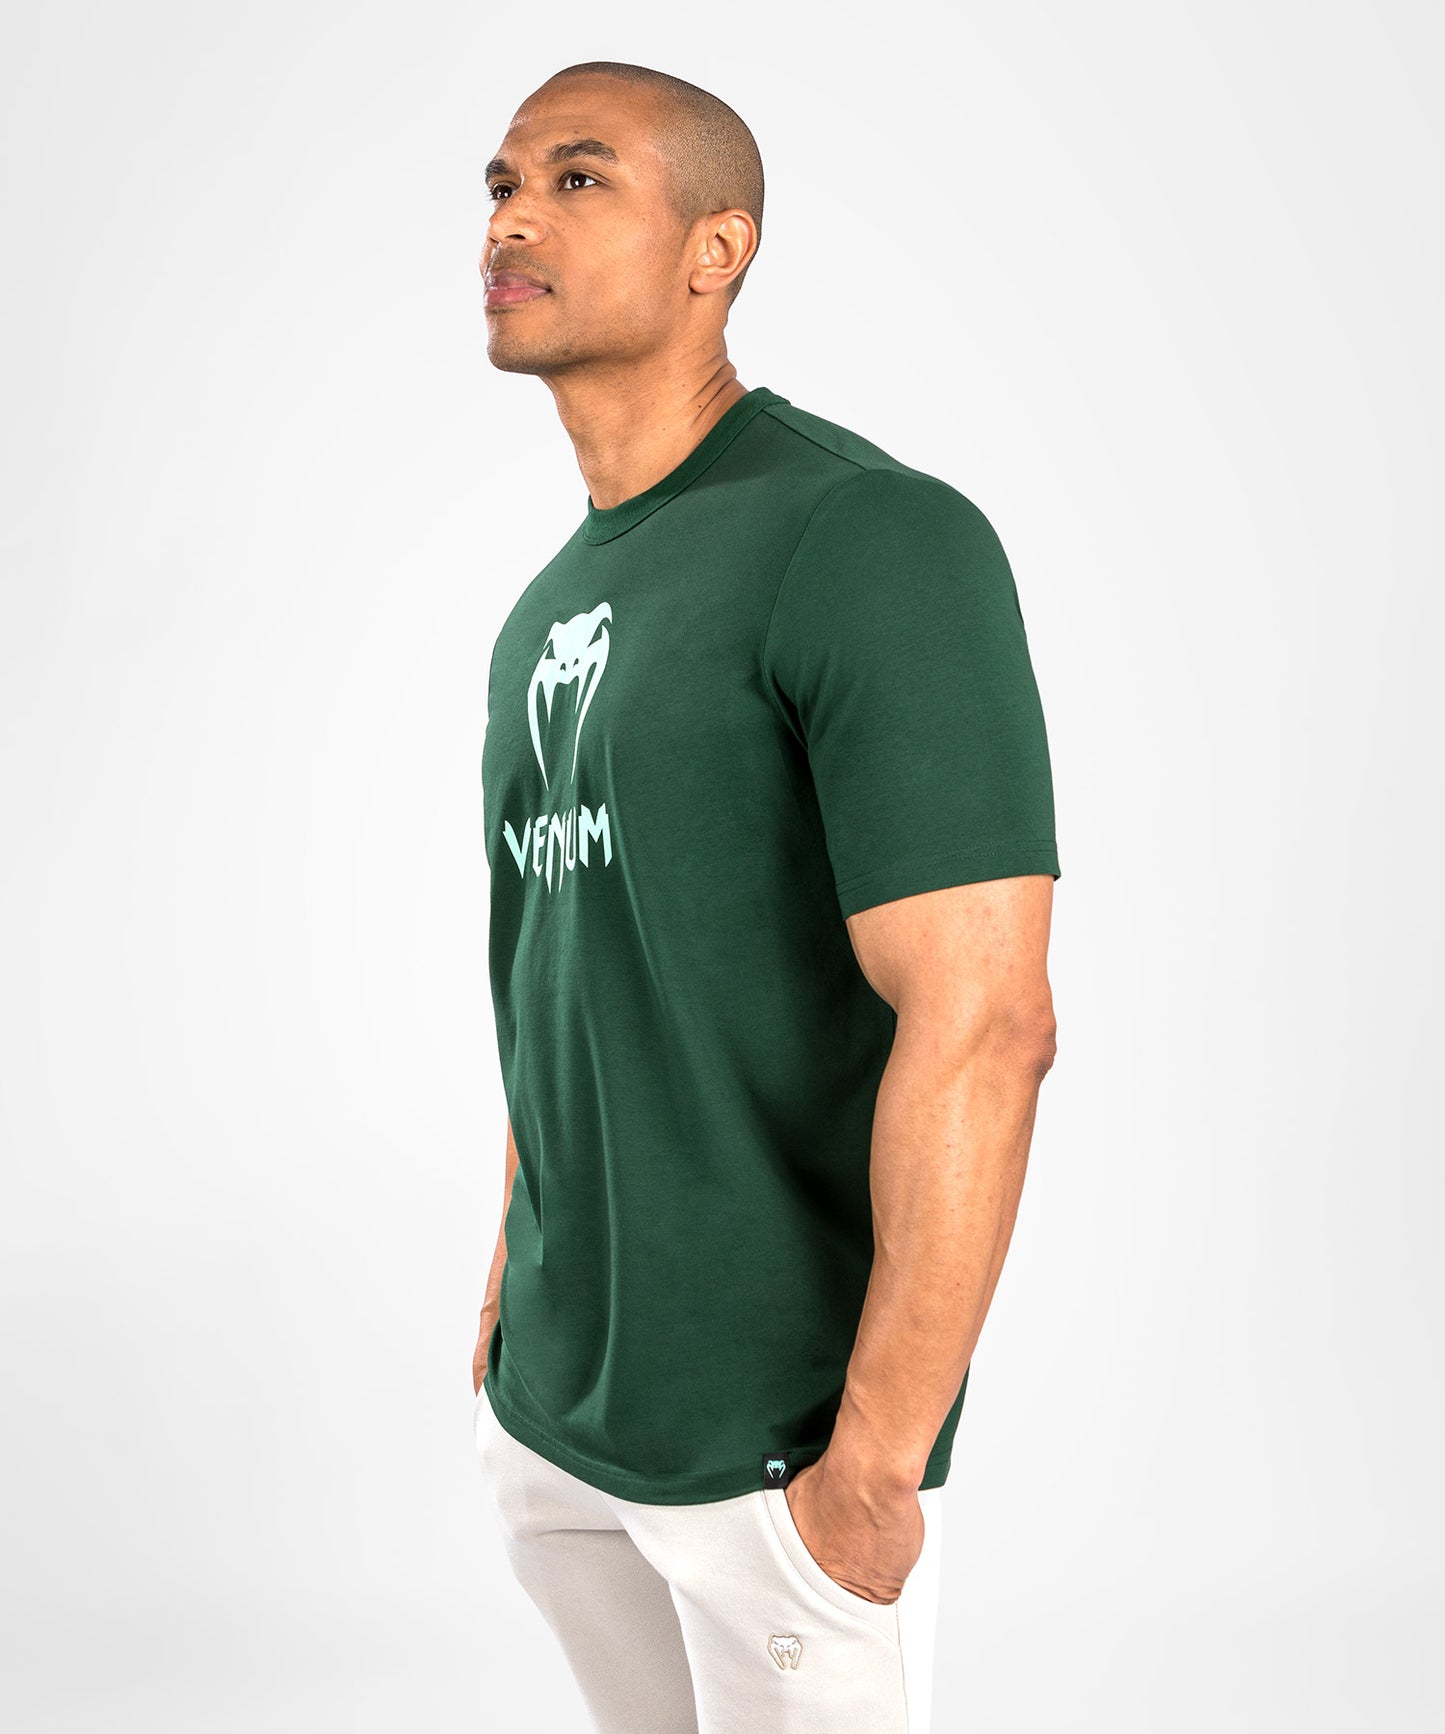 Venum Classic T-Shirt - Dark Green/Turquoise